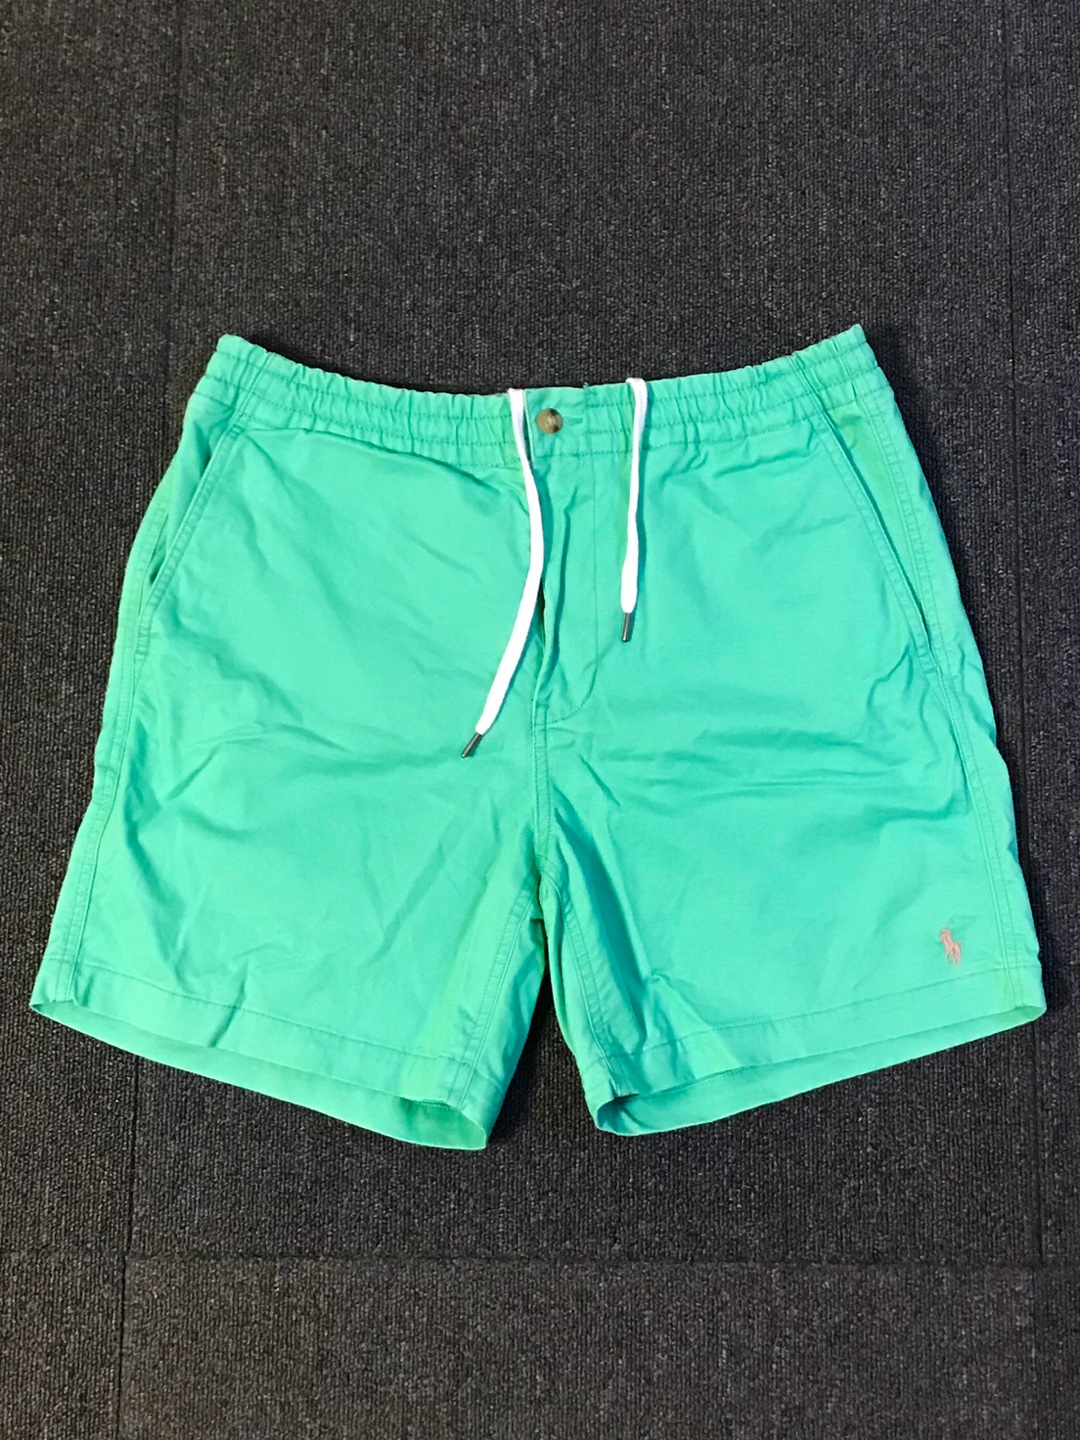 Polo RL cotton/elastane banded shorts (S size, ~33인치 추천)